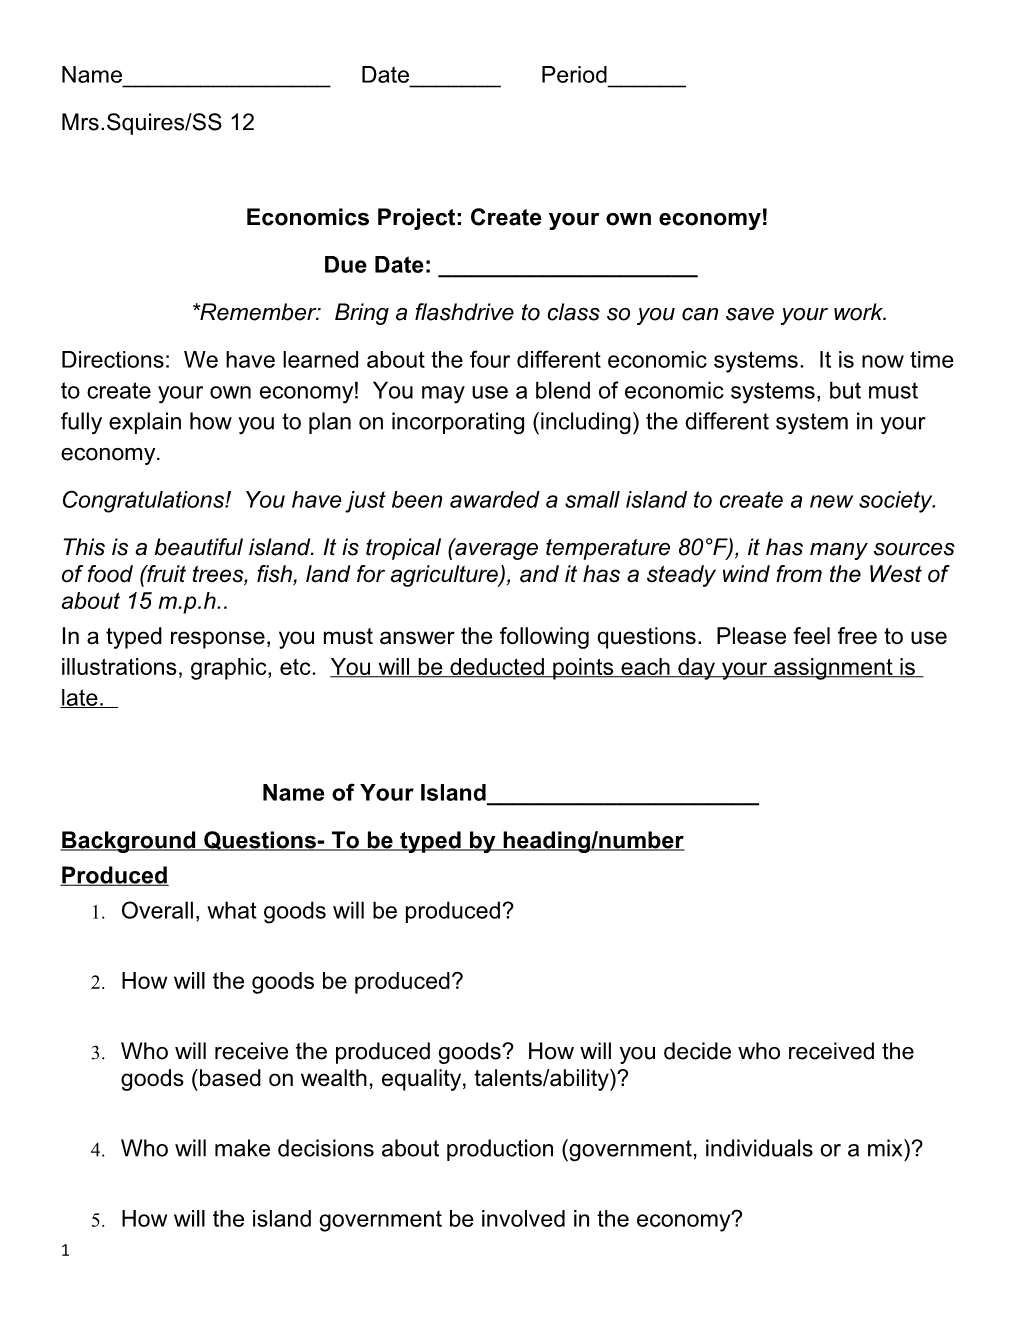 Economics Project: Create Your Own Economy!